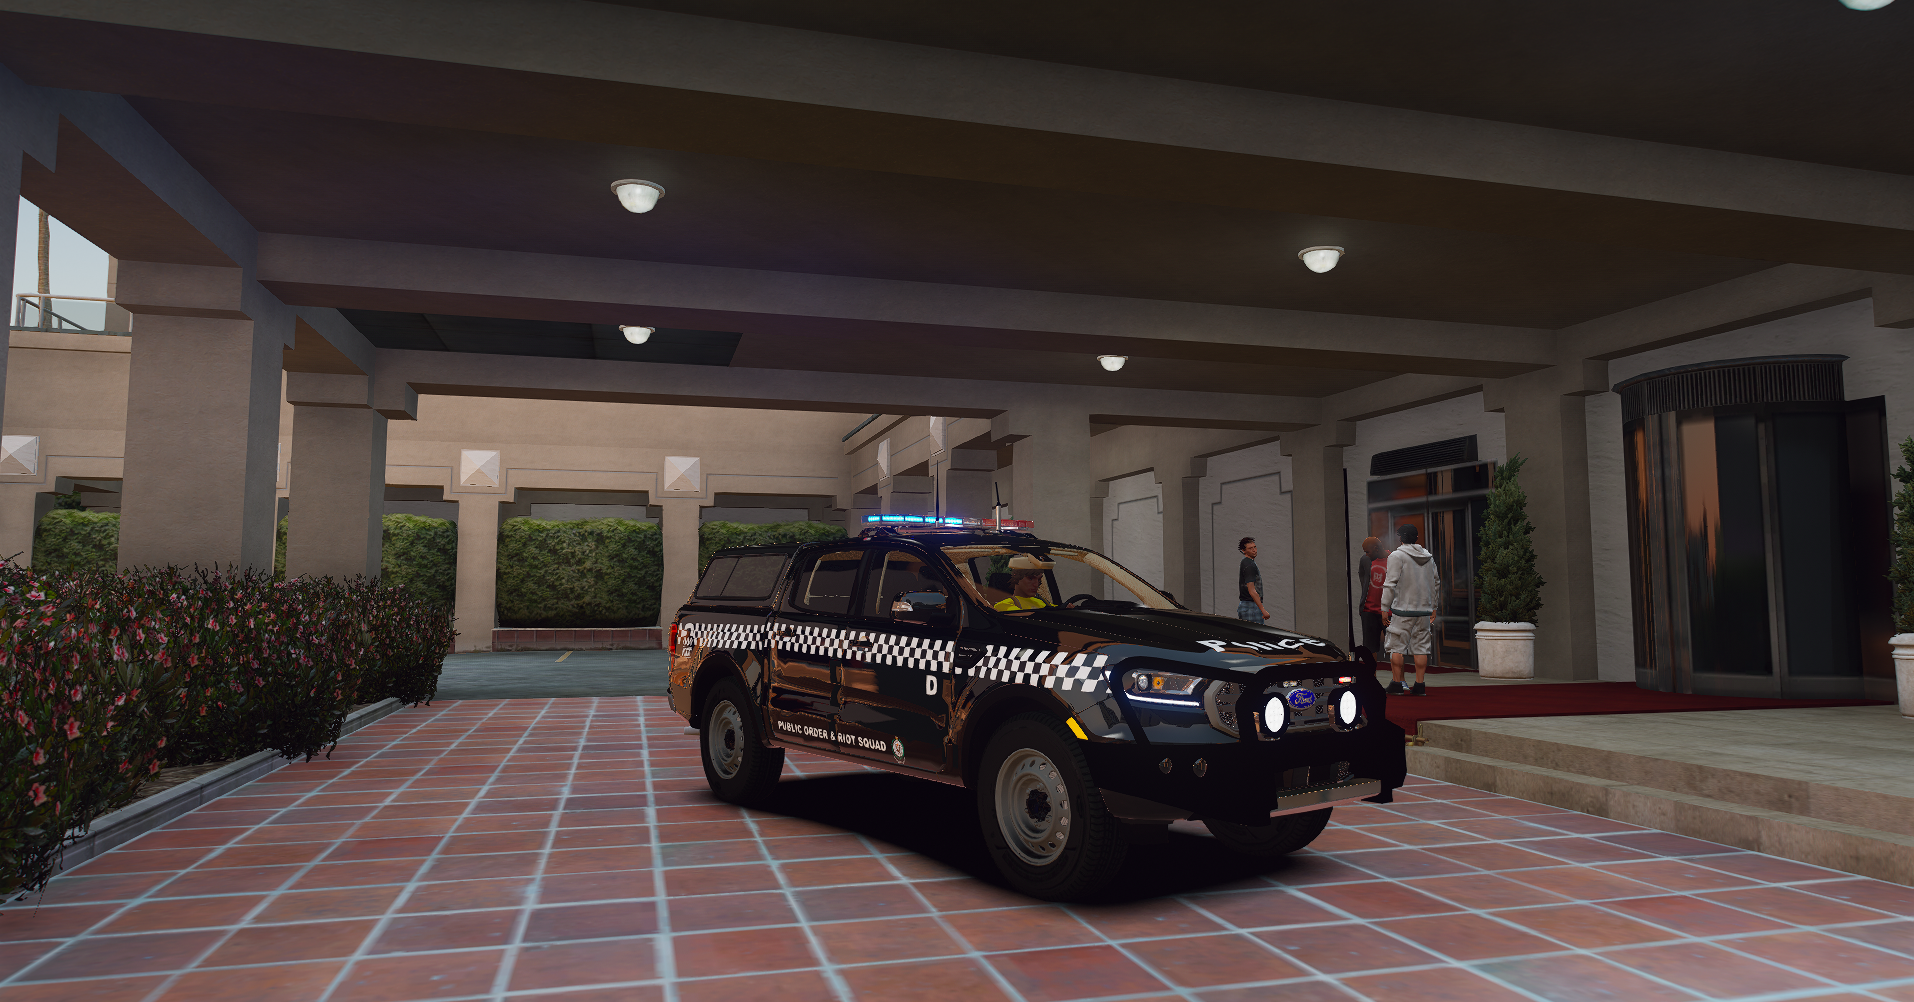 Mitsubishi da Polícia Federal - GTA 5 Mods 